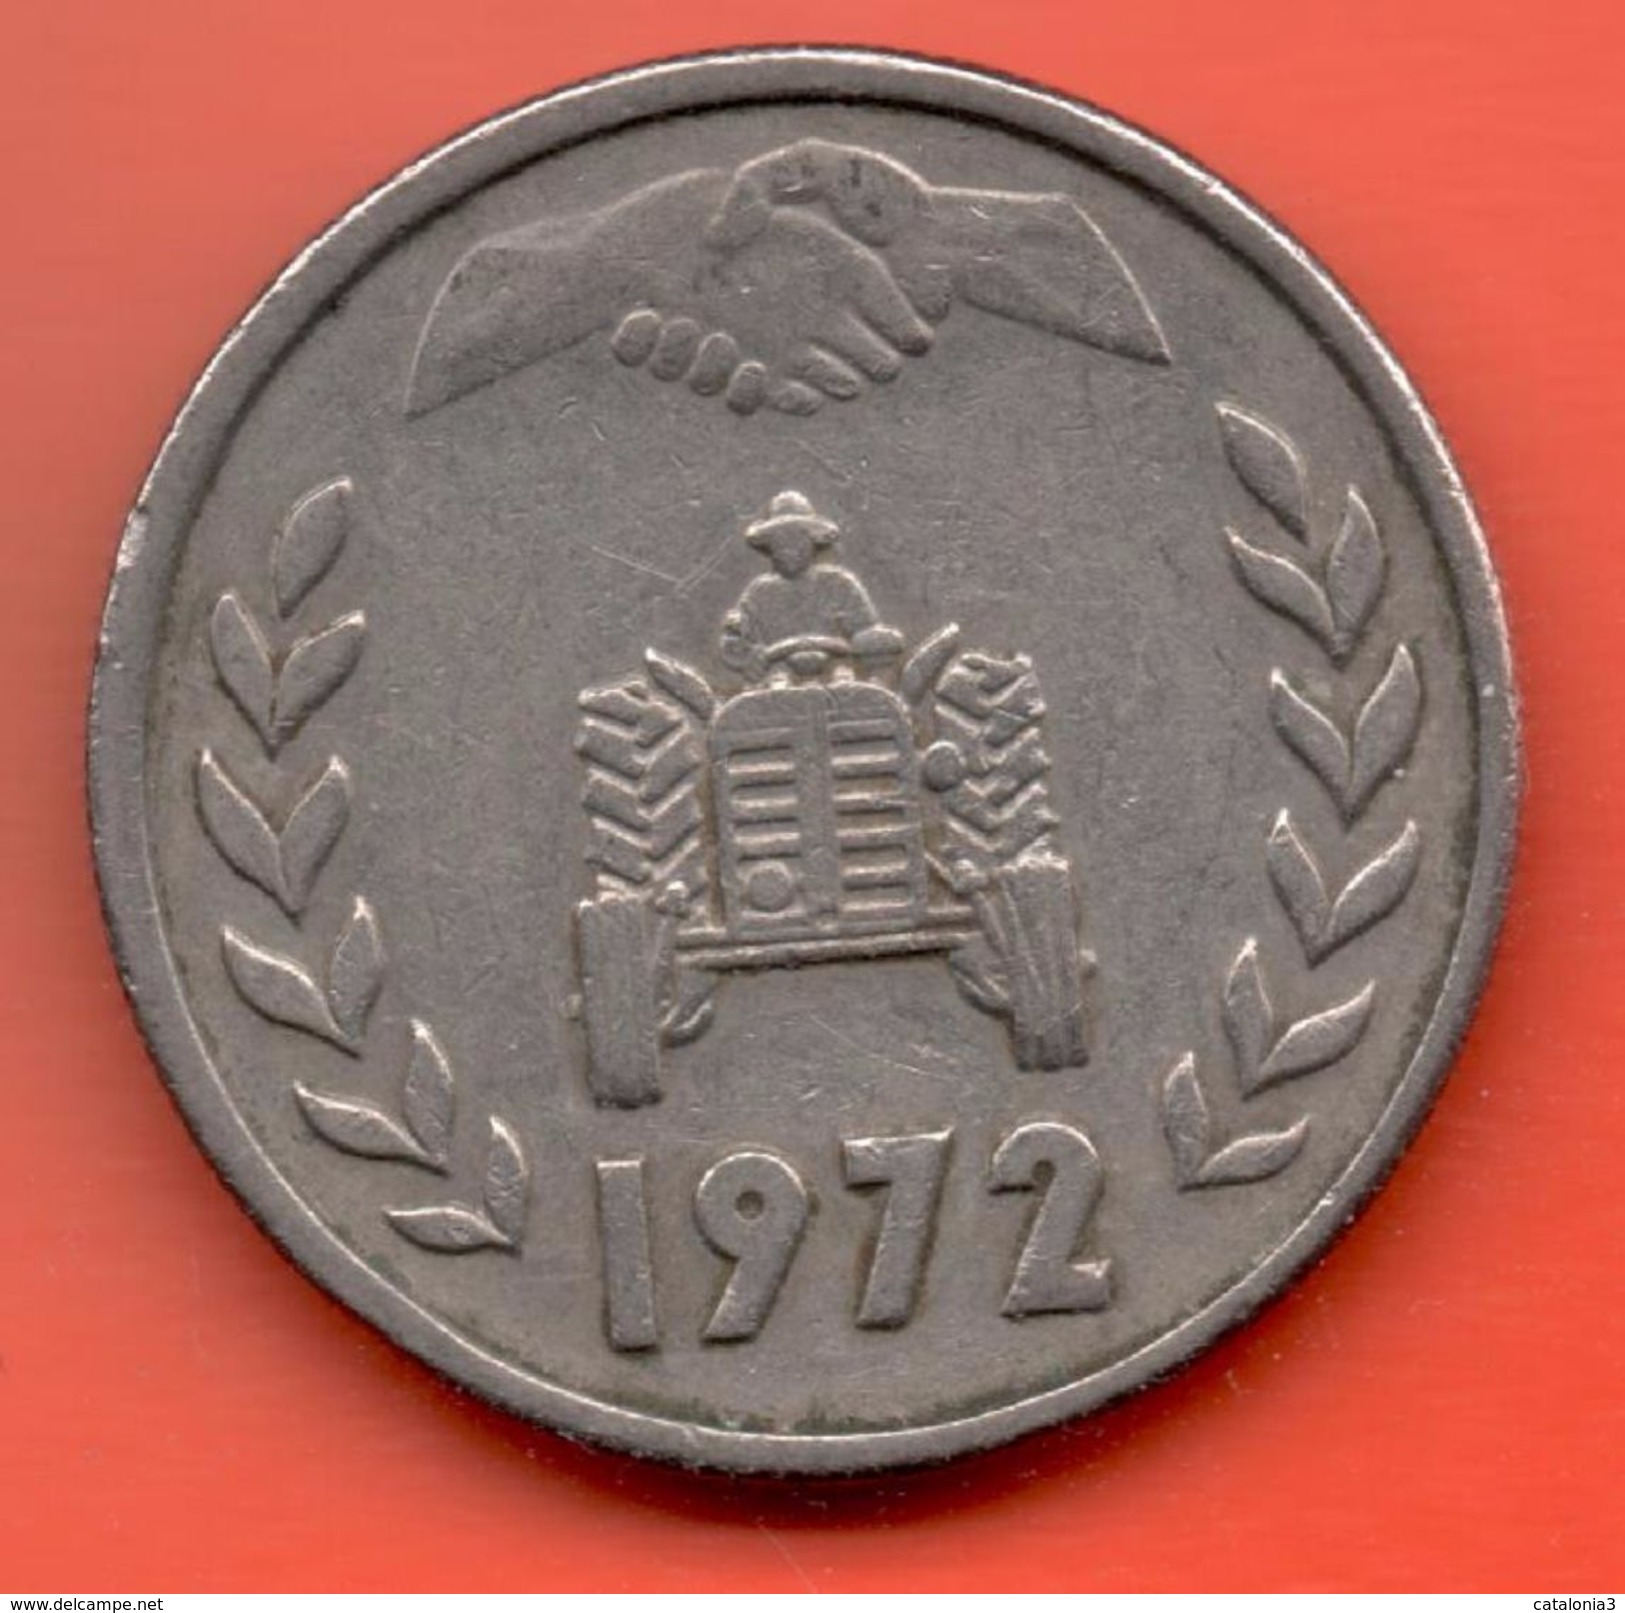 ARGELIA - ALGERIA = 1 DINAR 1972 - Argelia